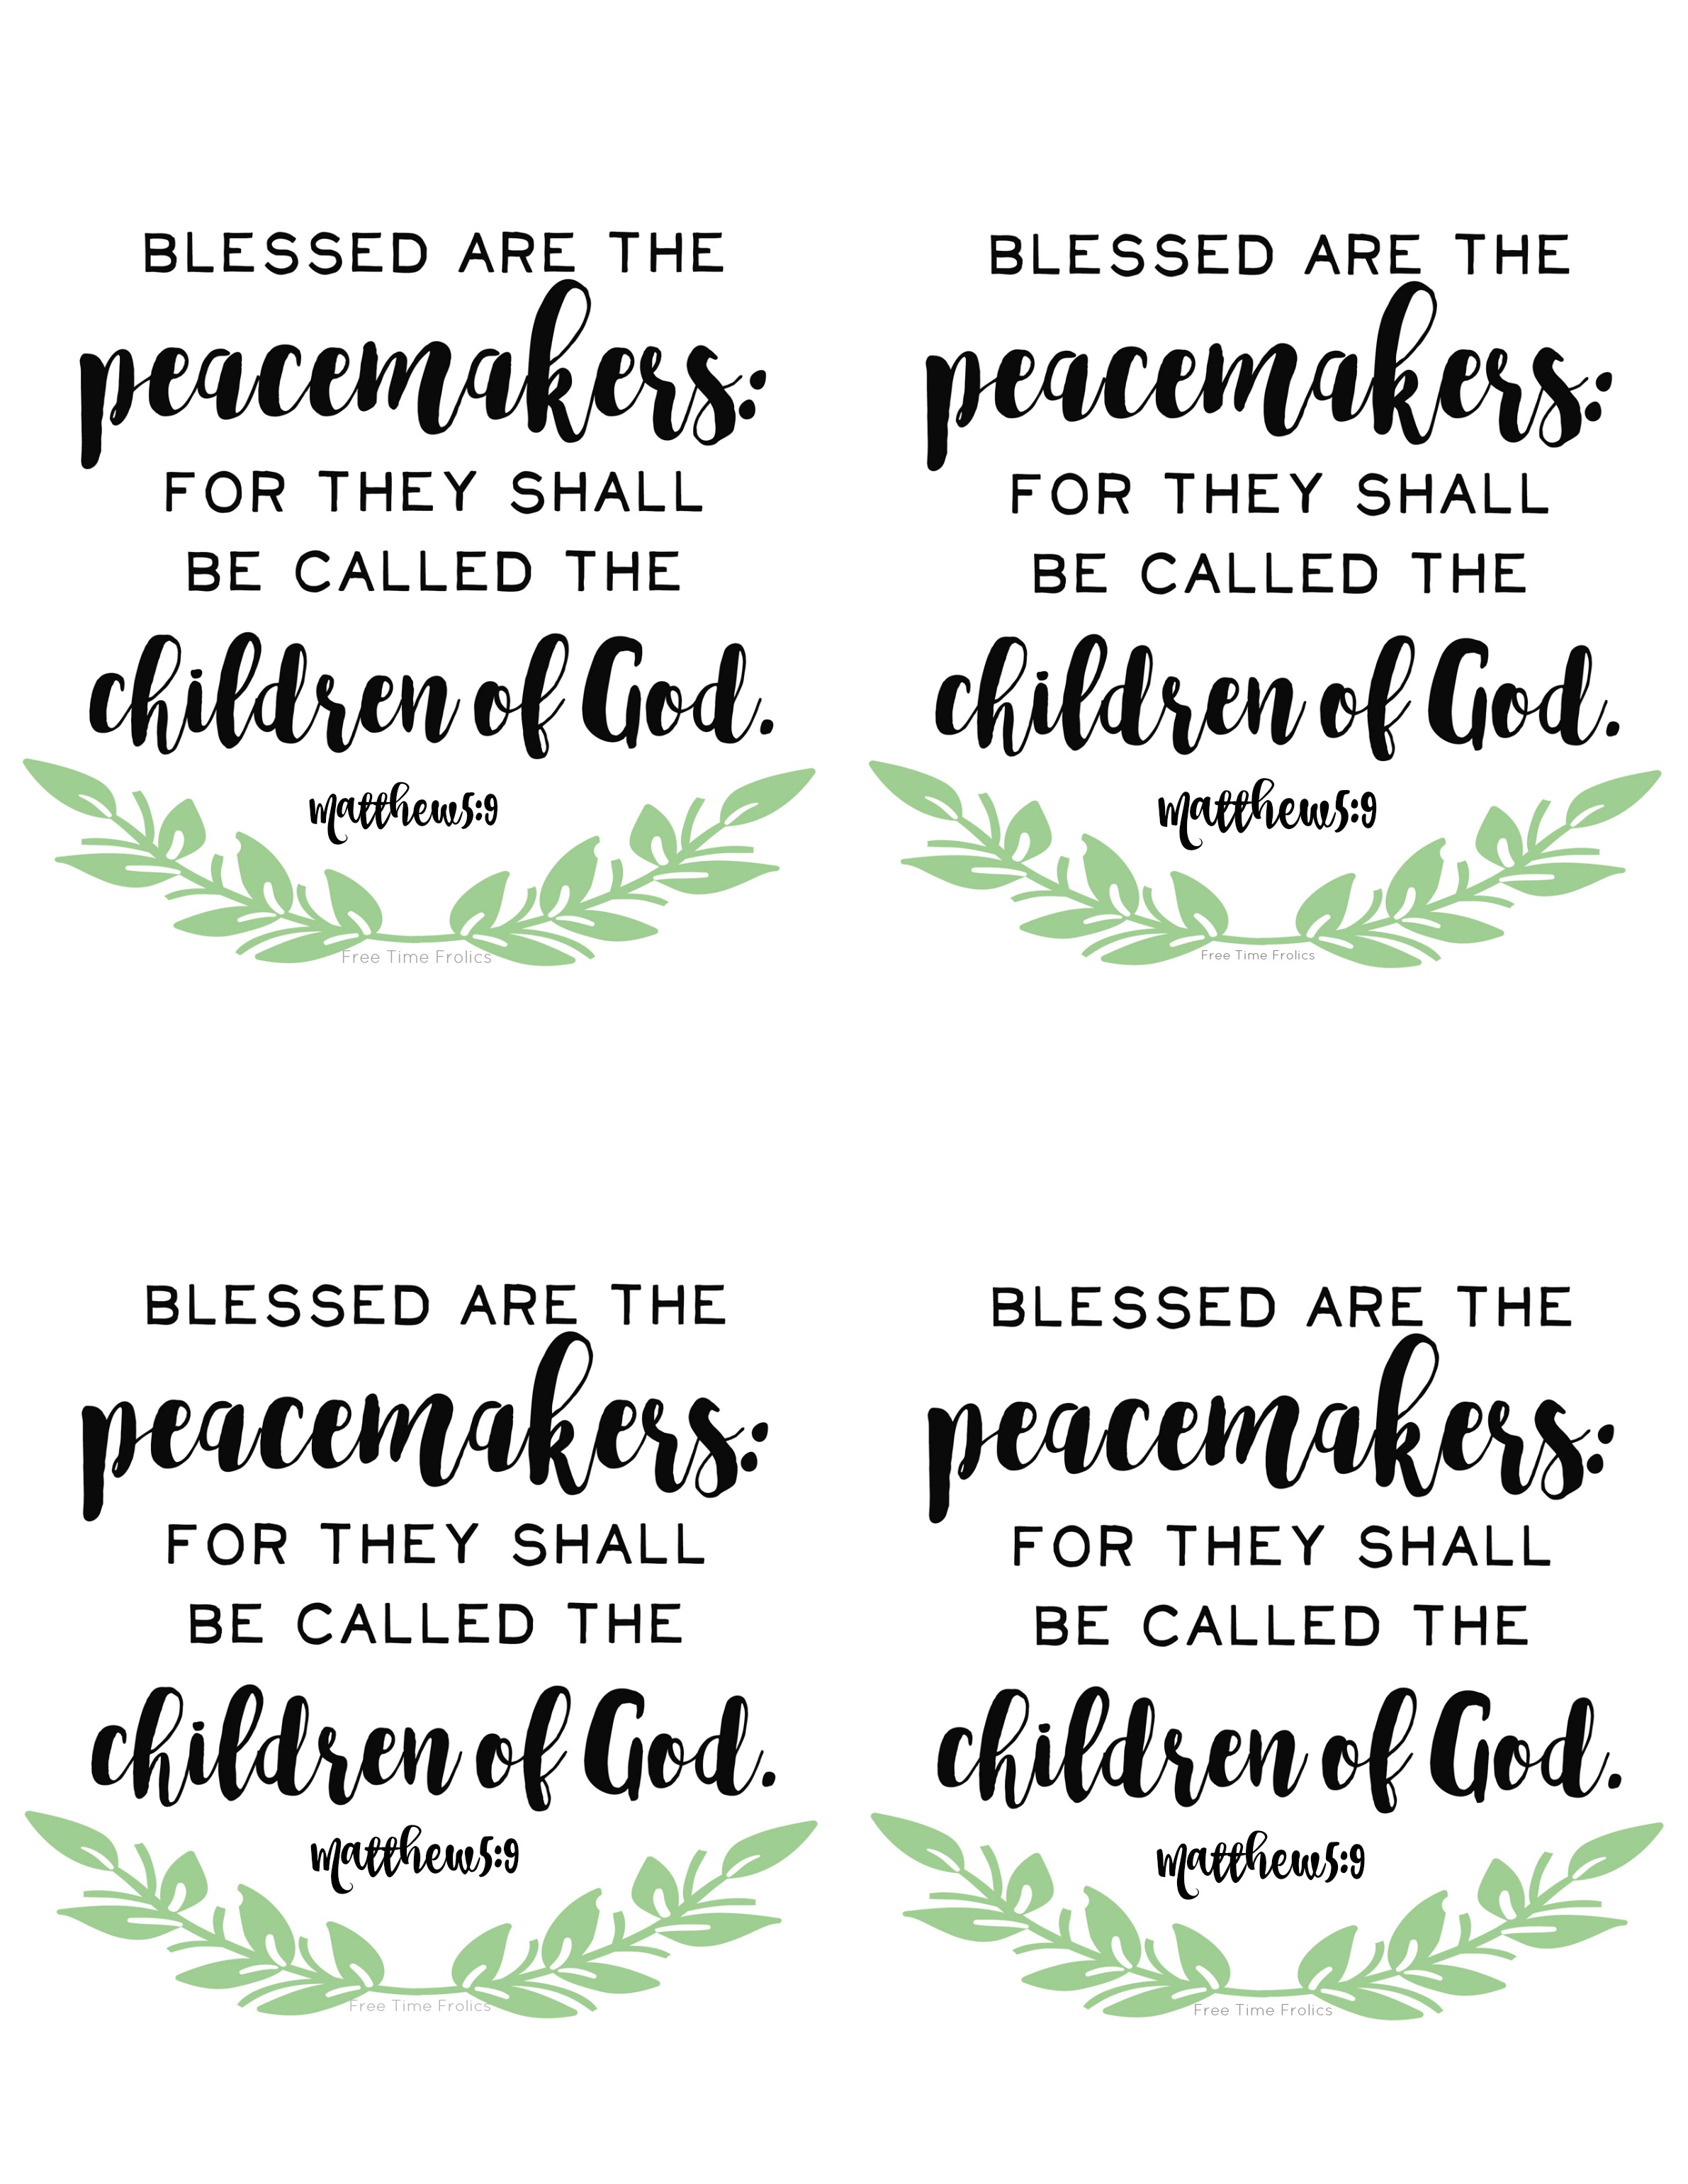 Peacemakers mini